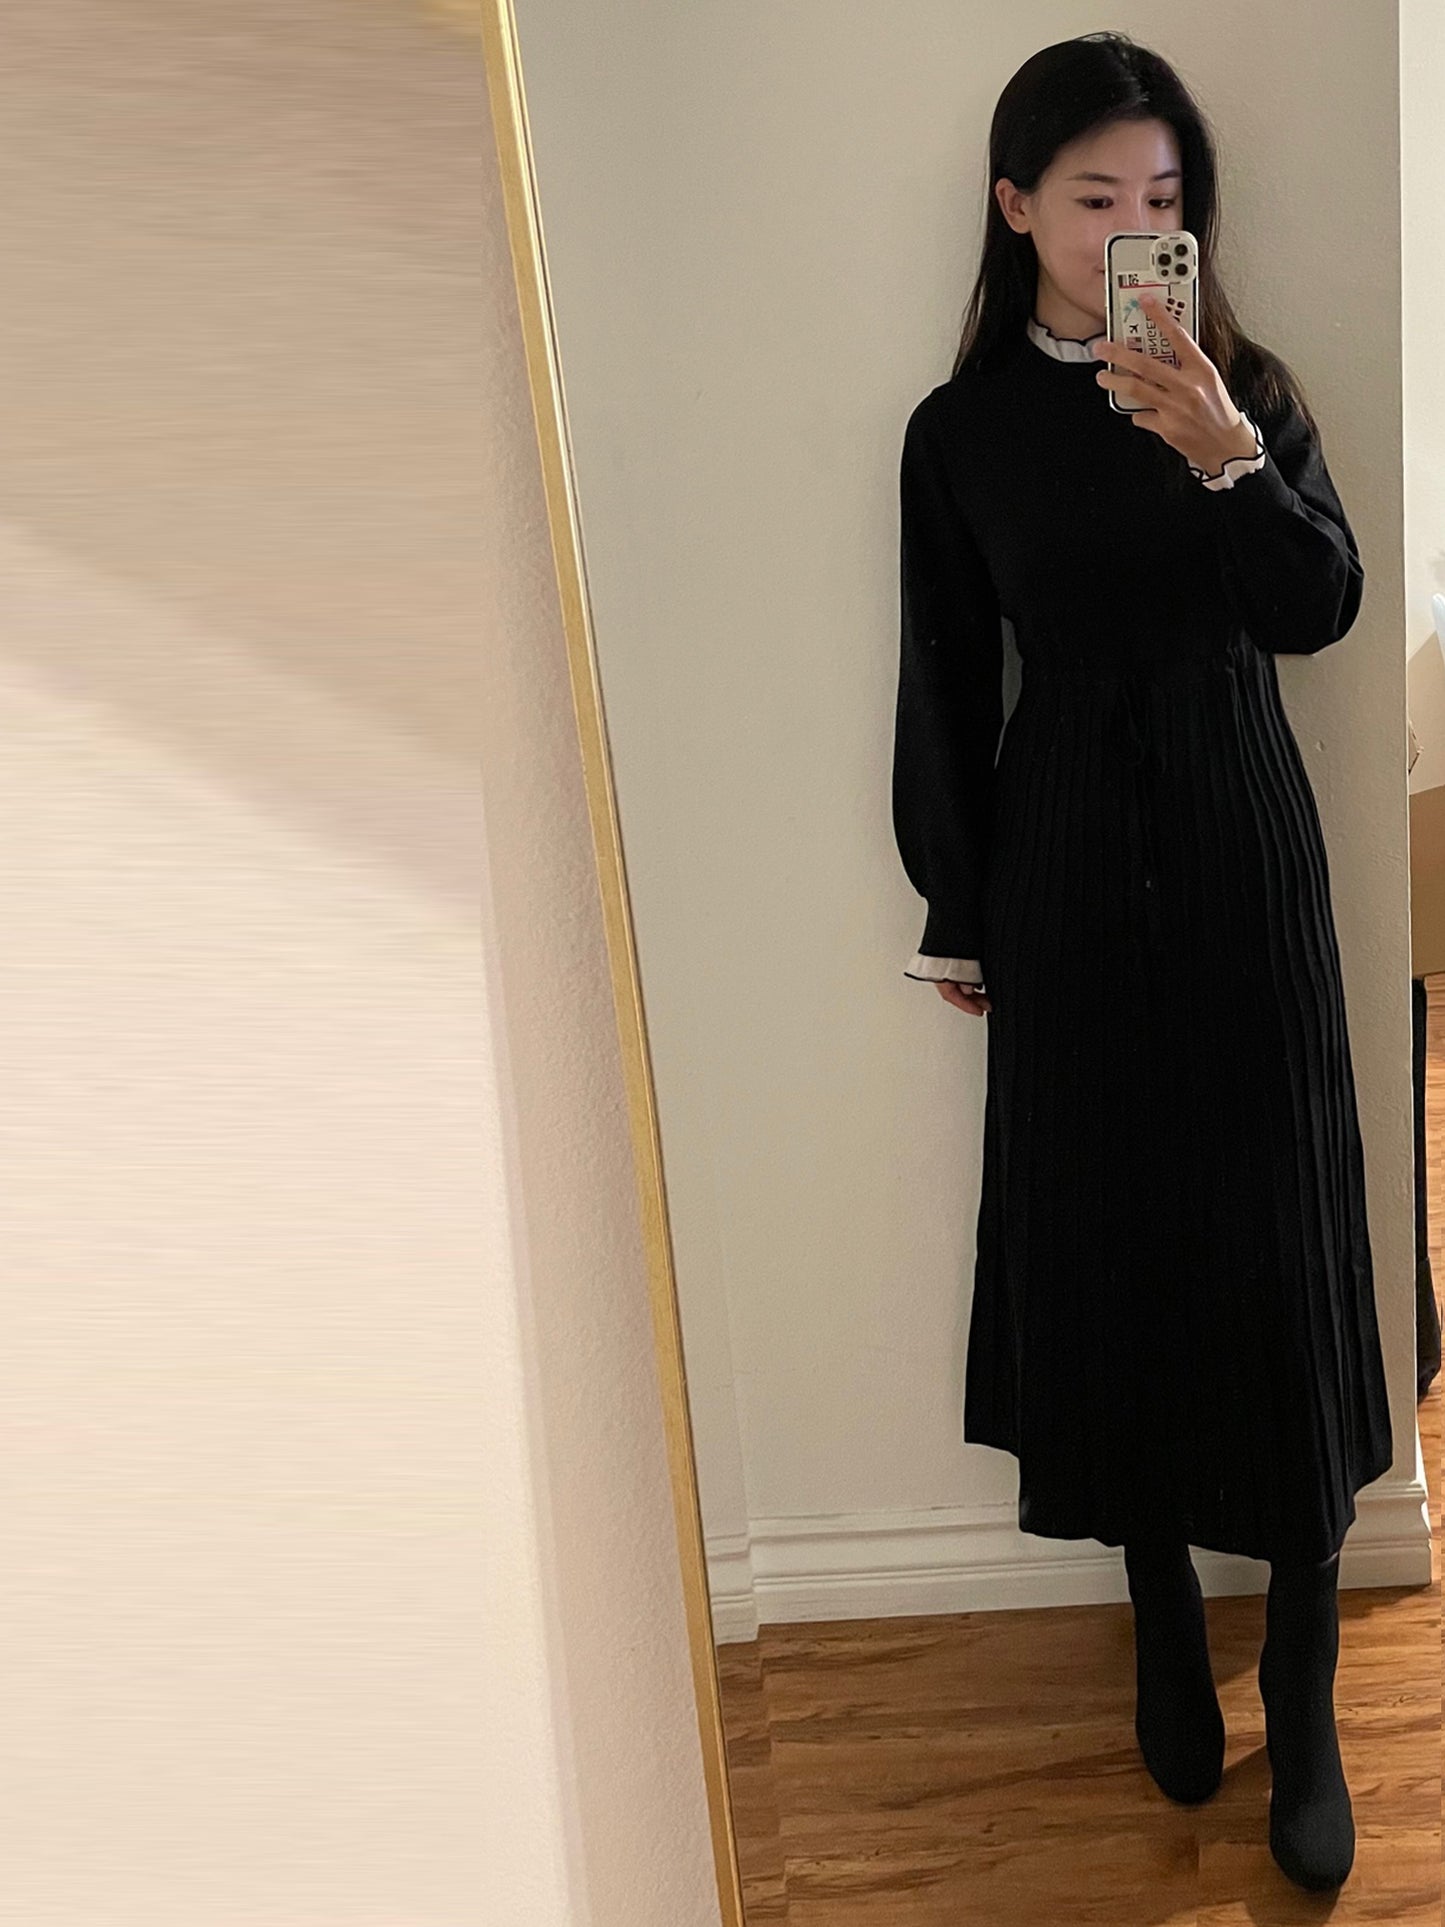 Lovely ♥ Veronica Sweater Dress